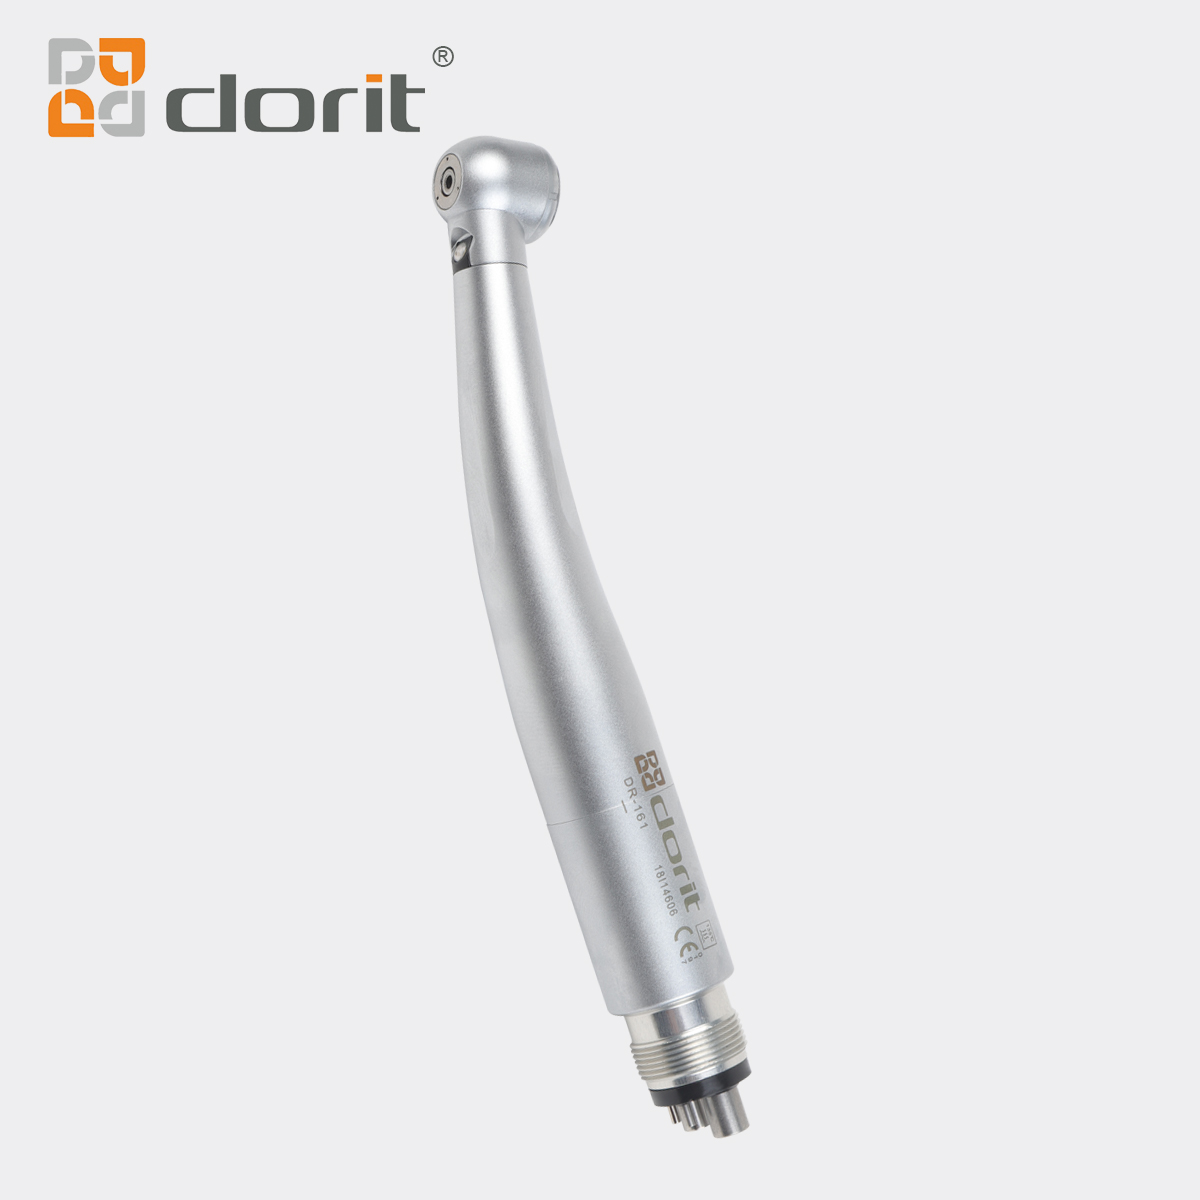 Dorit DR-161 High Speed Led-generator Handpiece